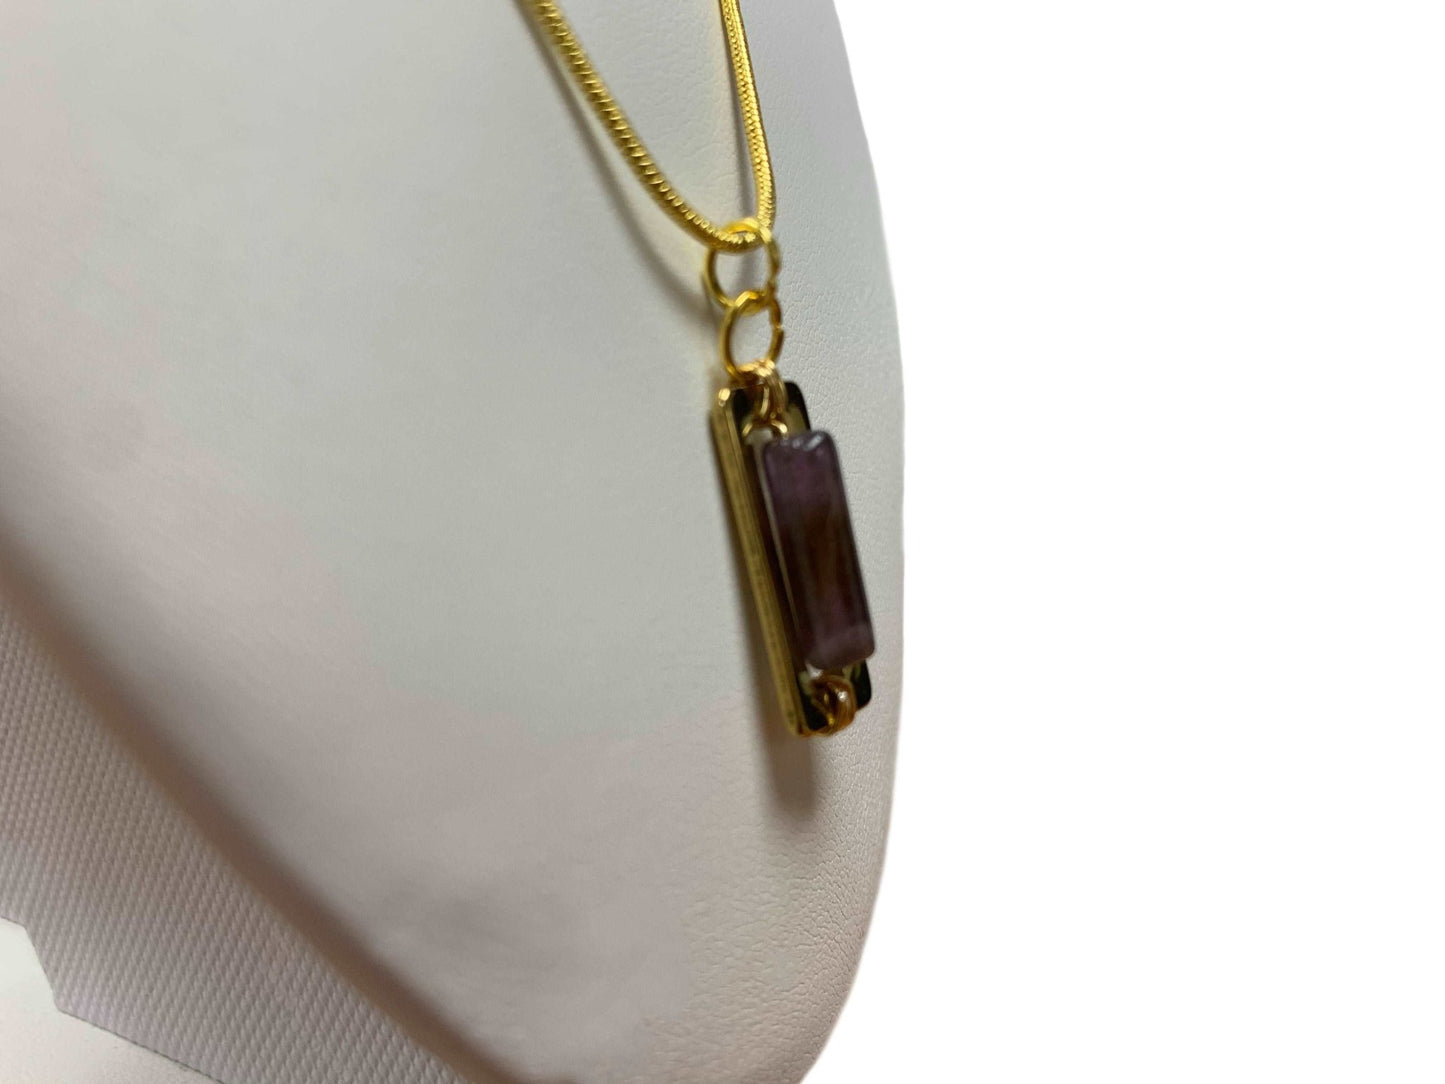 Claire Dainty Handmade Amethyst Pendant Necklace - Born Mystics